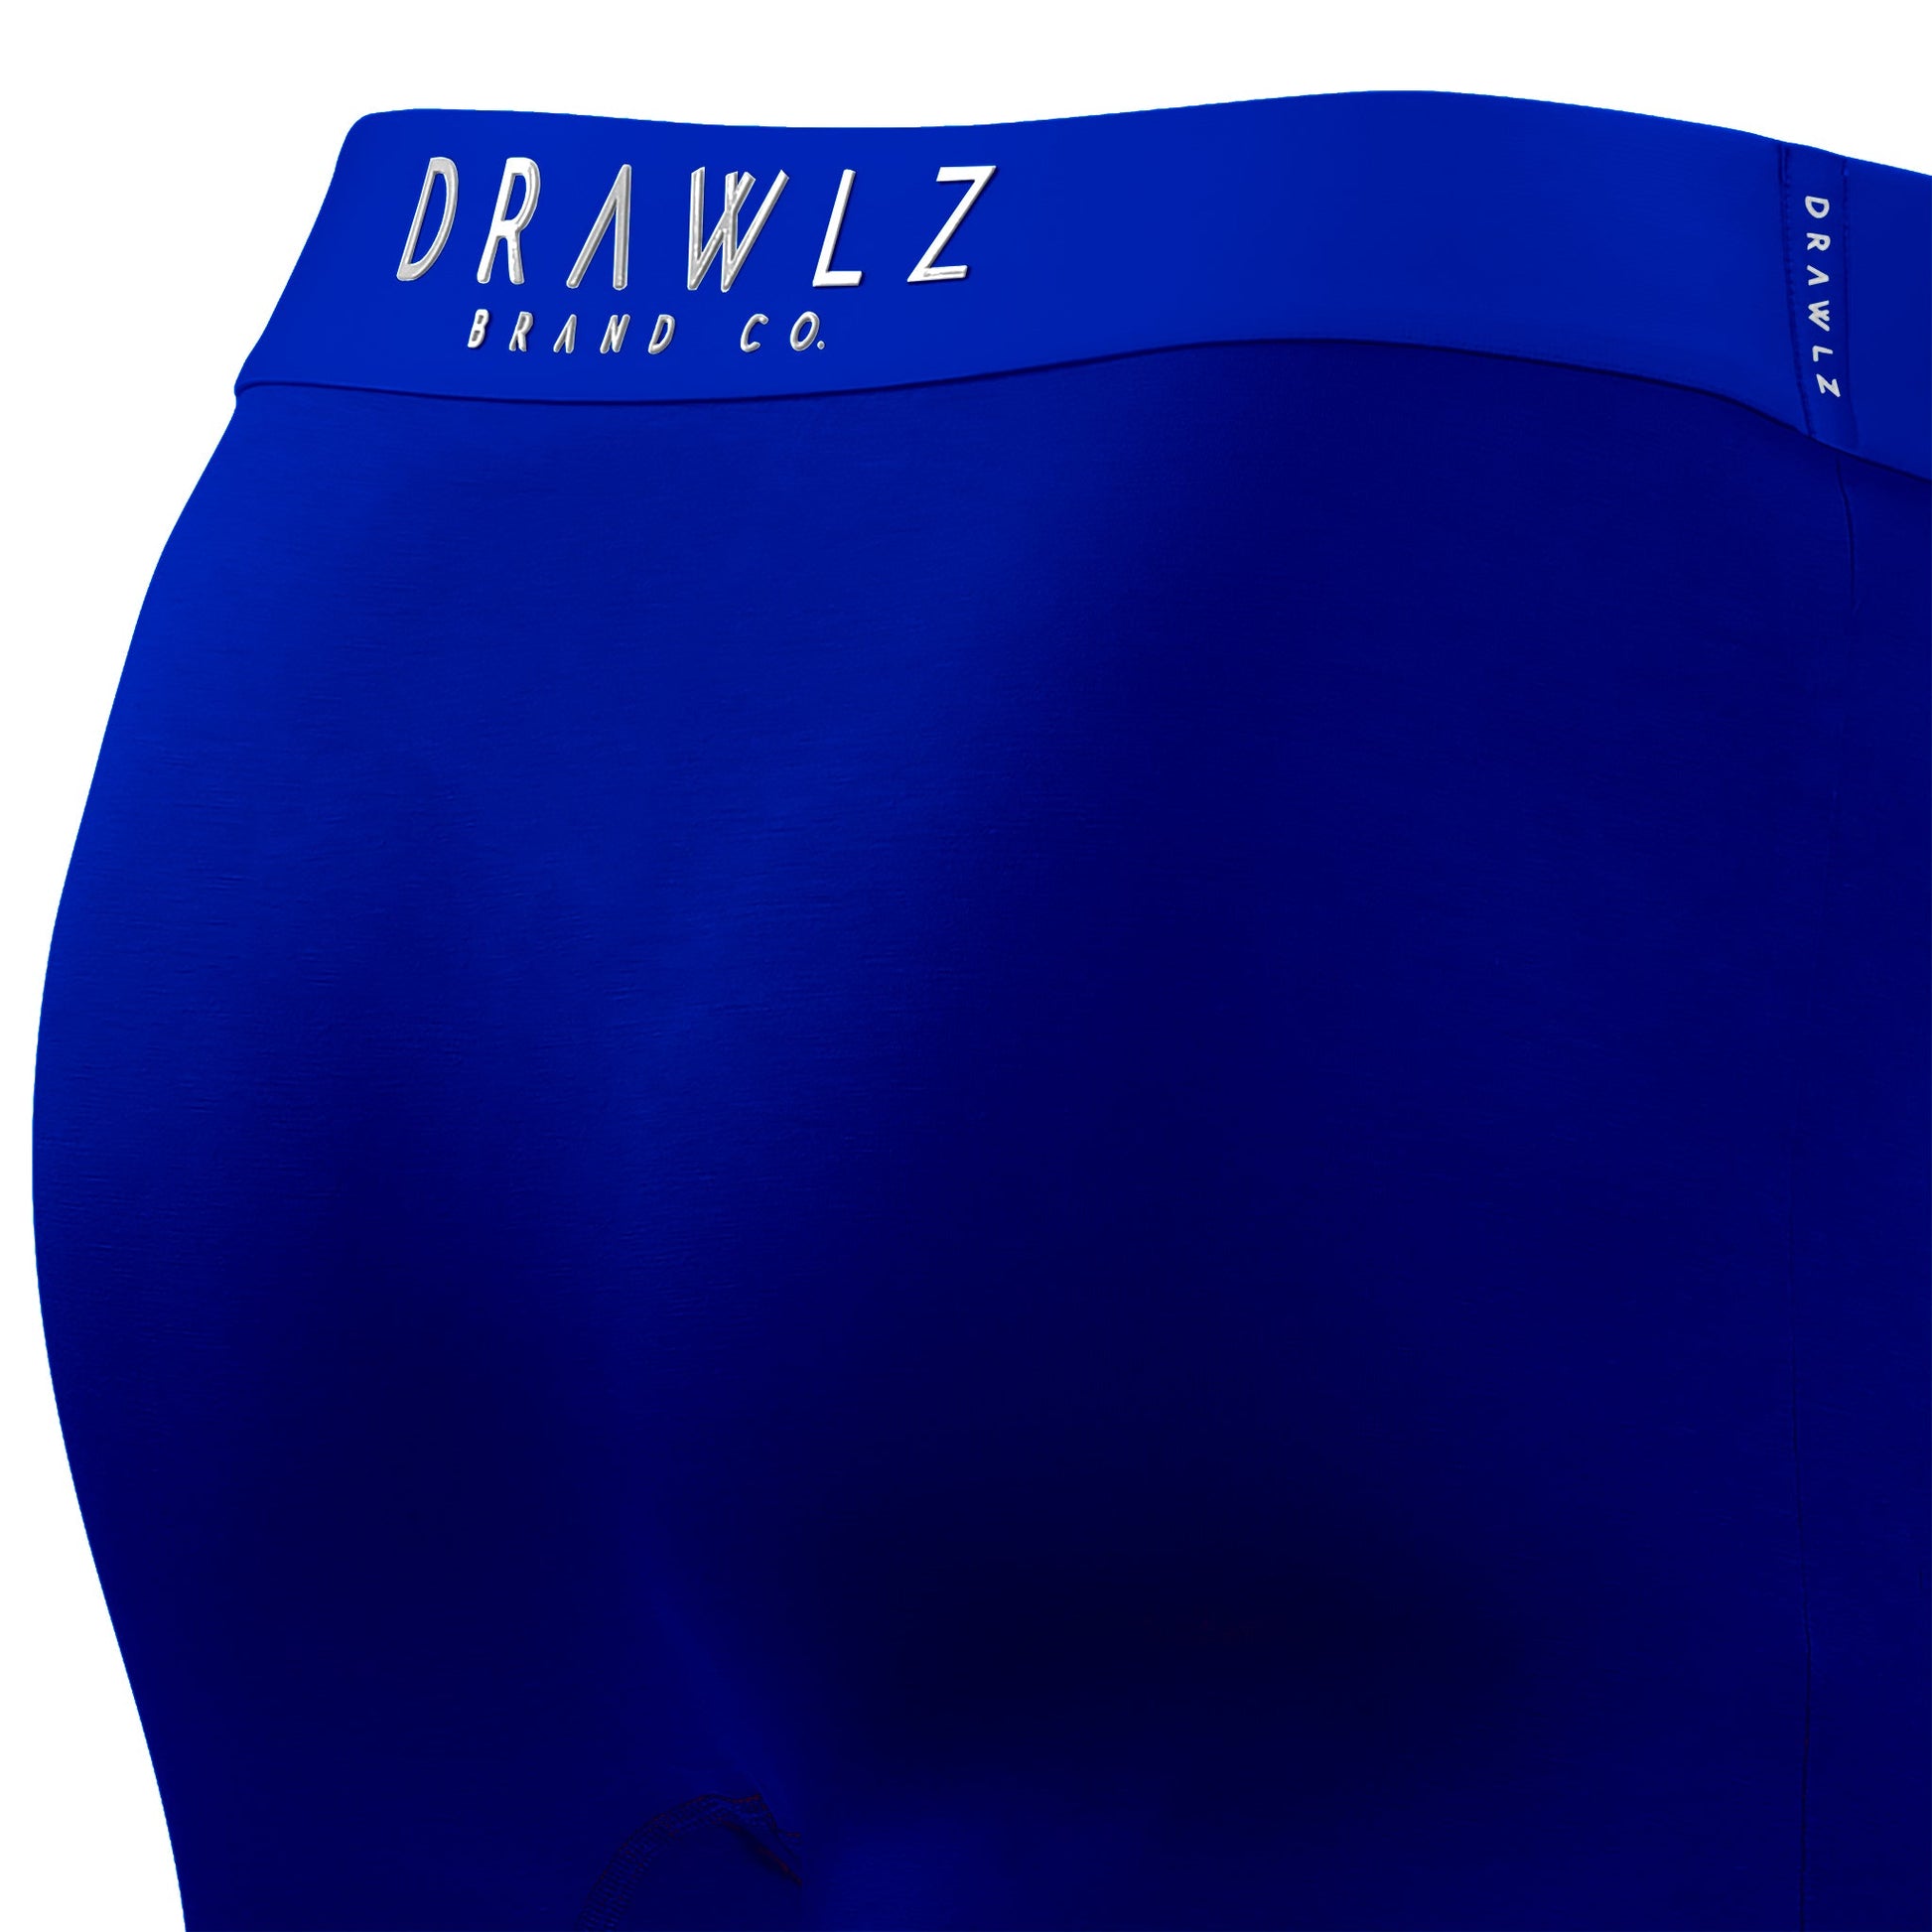 Valentine Boxers for Men  Drawlz Valentinez Collection – Drawlz Brand Co.